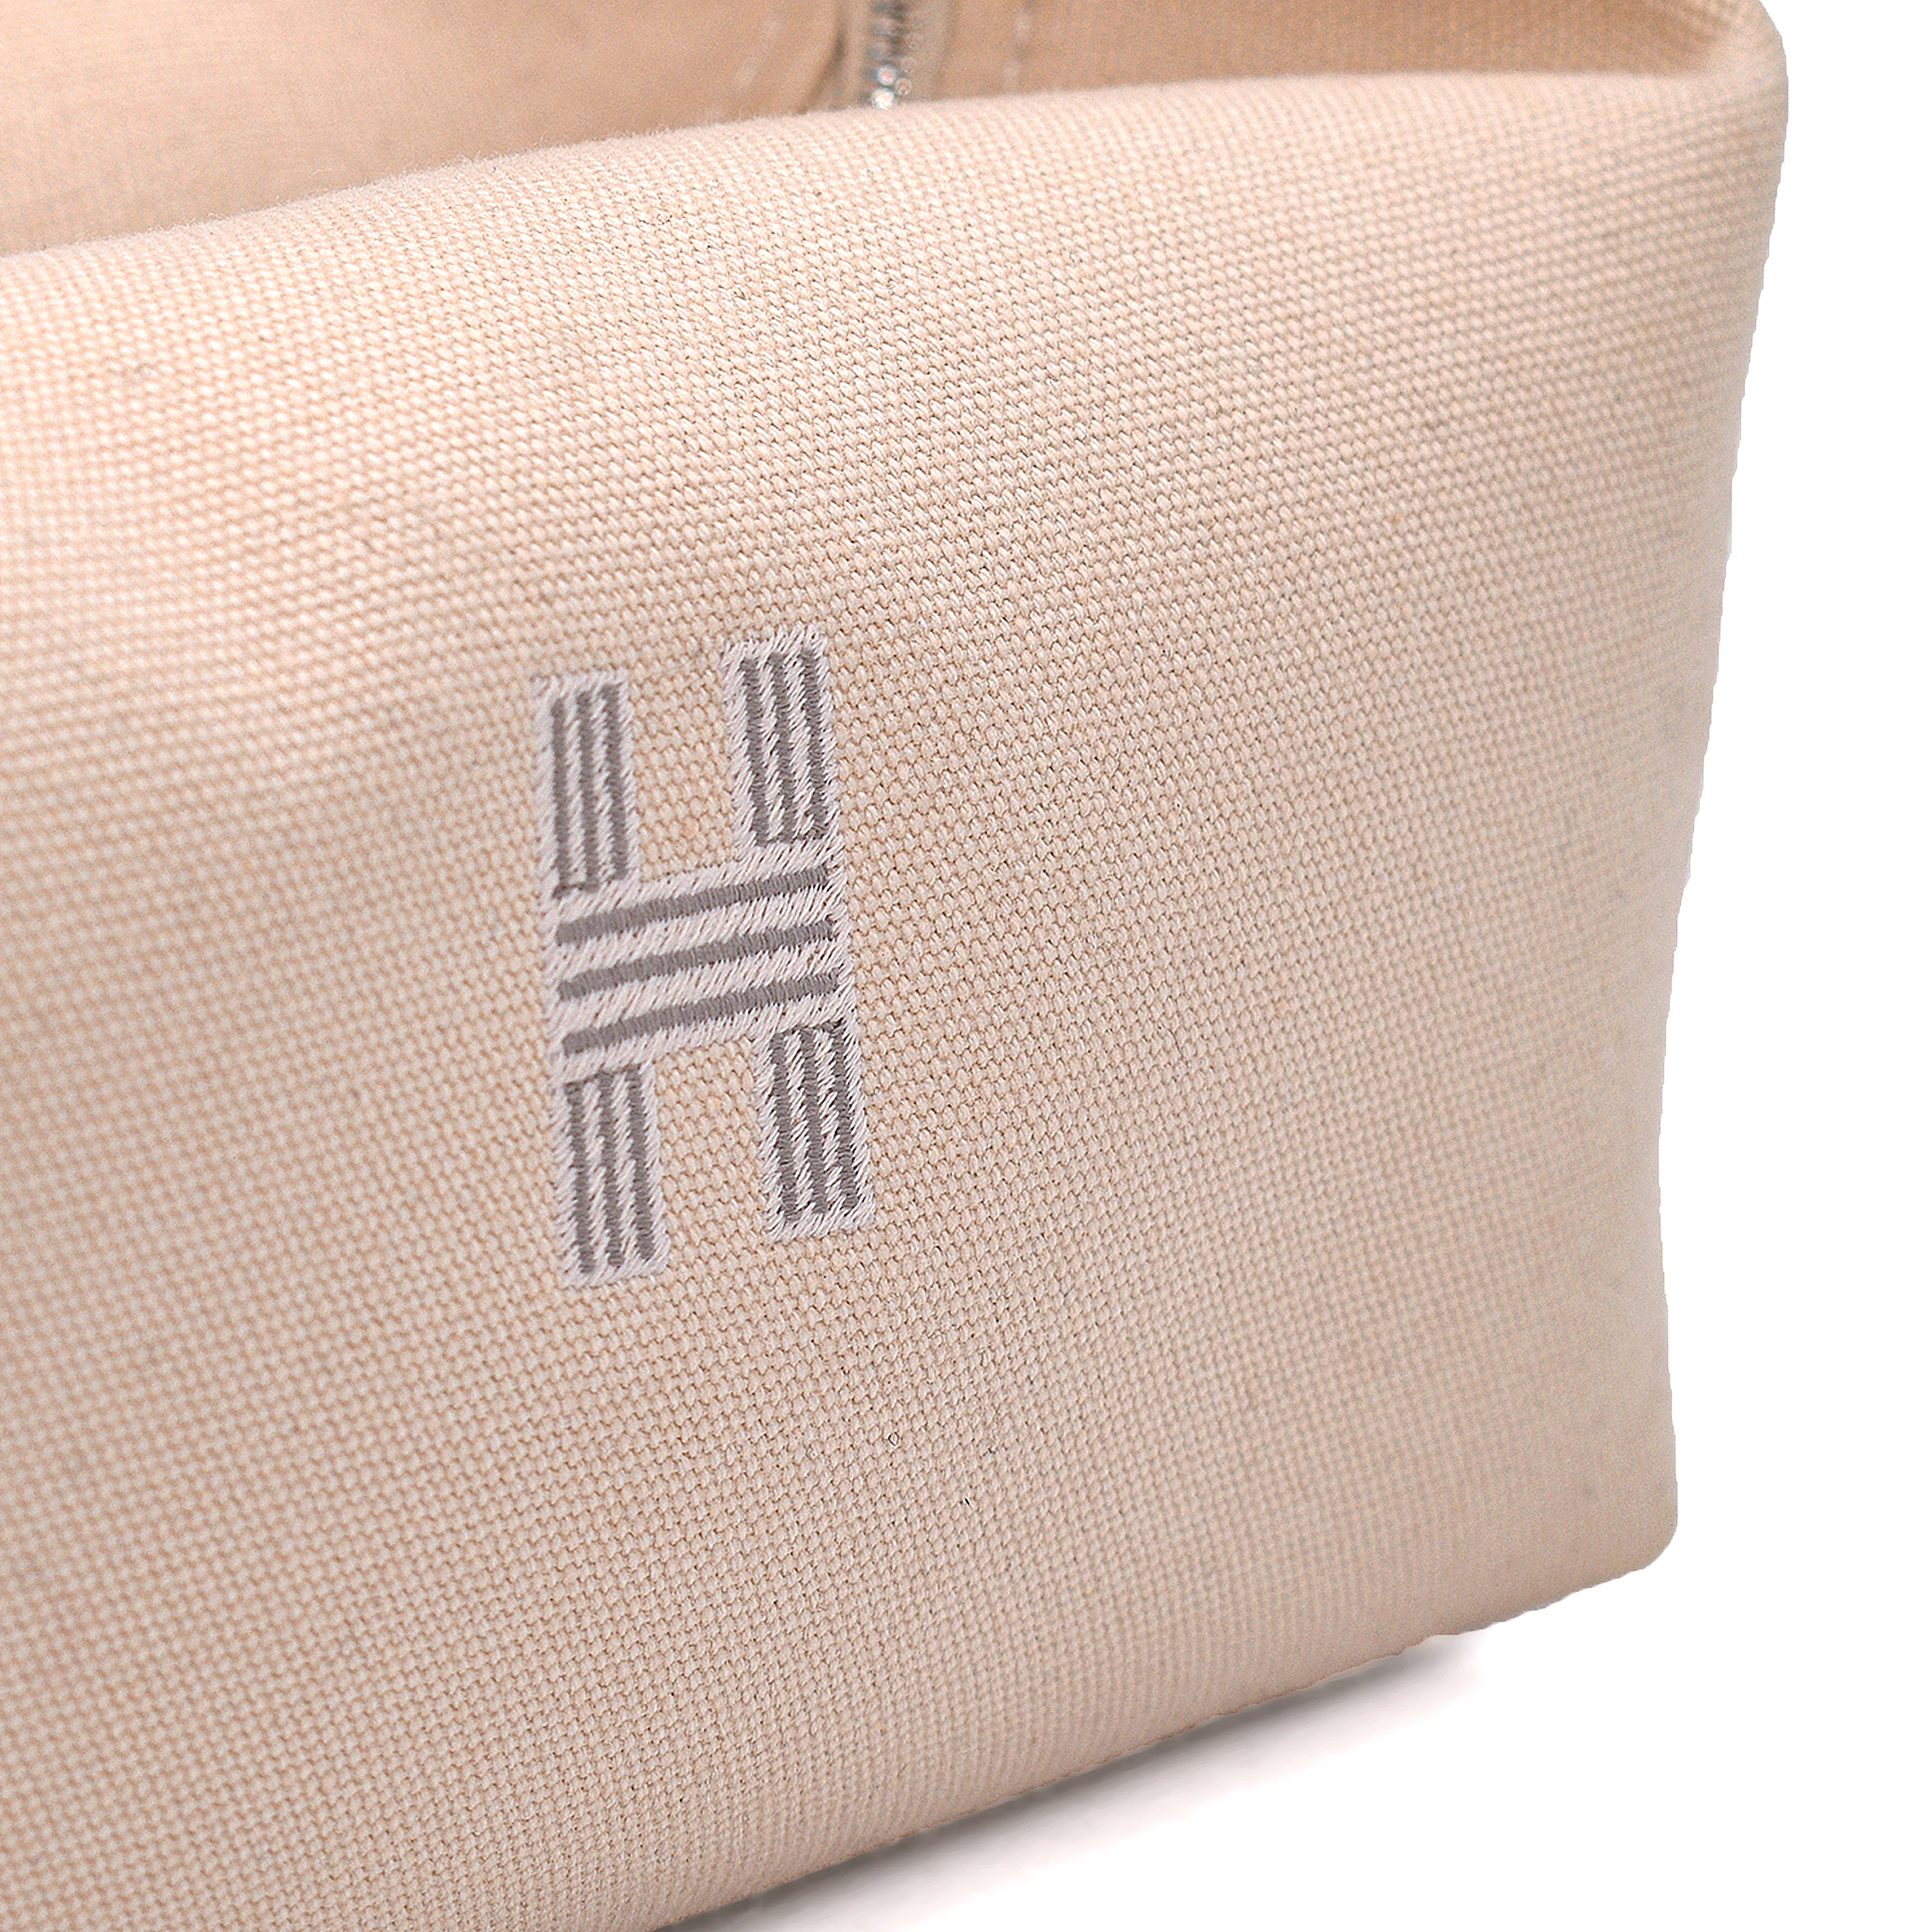 Hermes - Beige & White Canvas Small Bride Case Bag